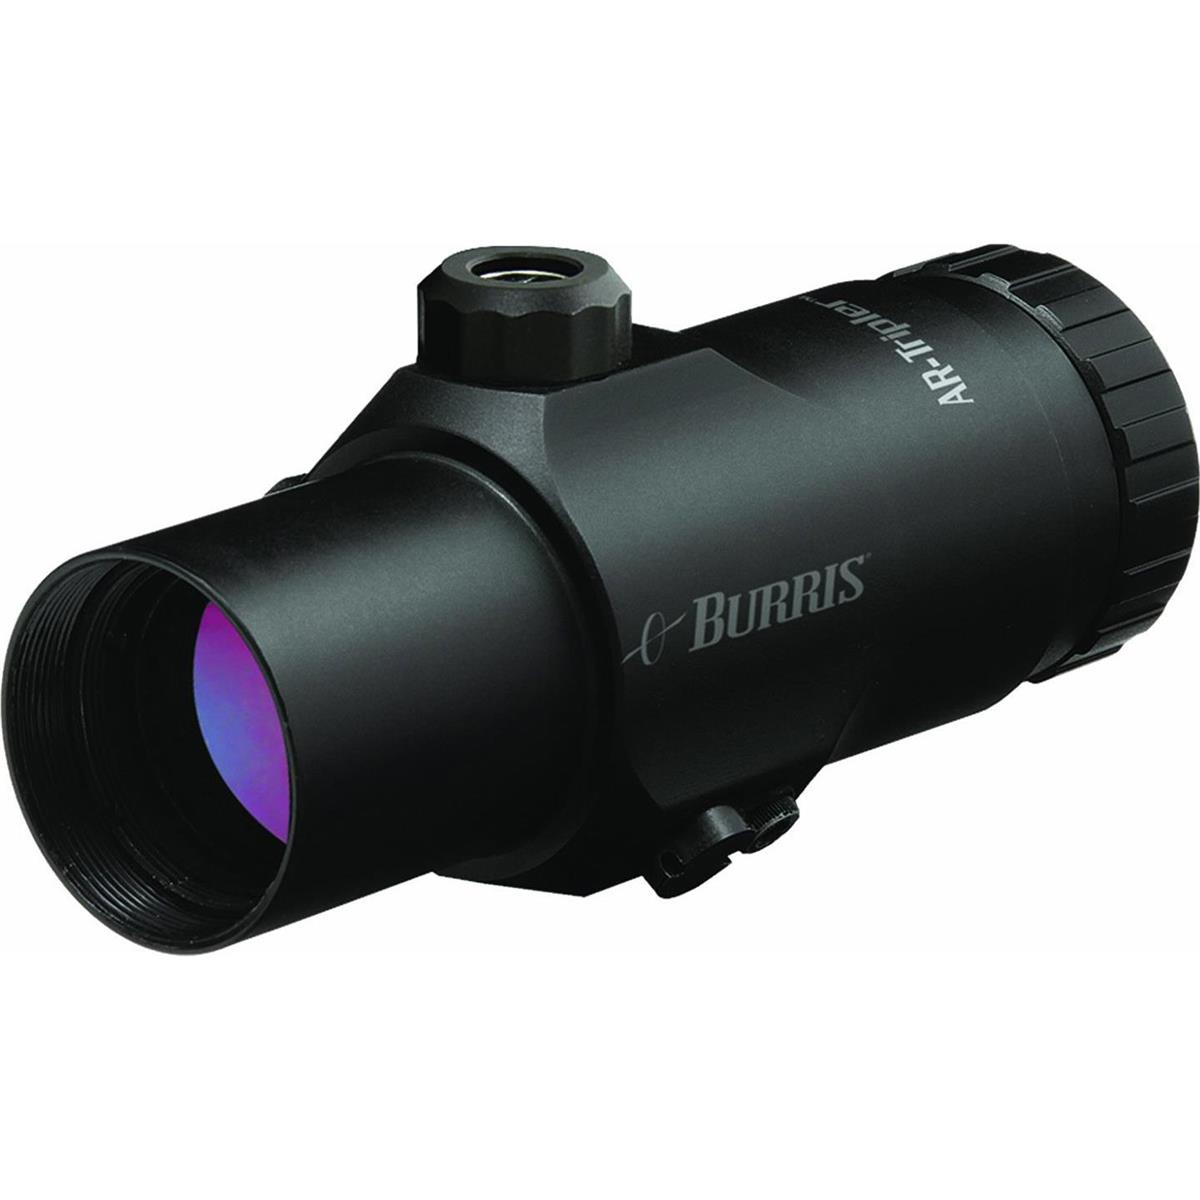 Image of Burris Optics AR-Tripler Gen 2 3x Magnifier Scope for Red Dot Sights